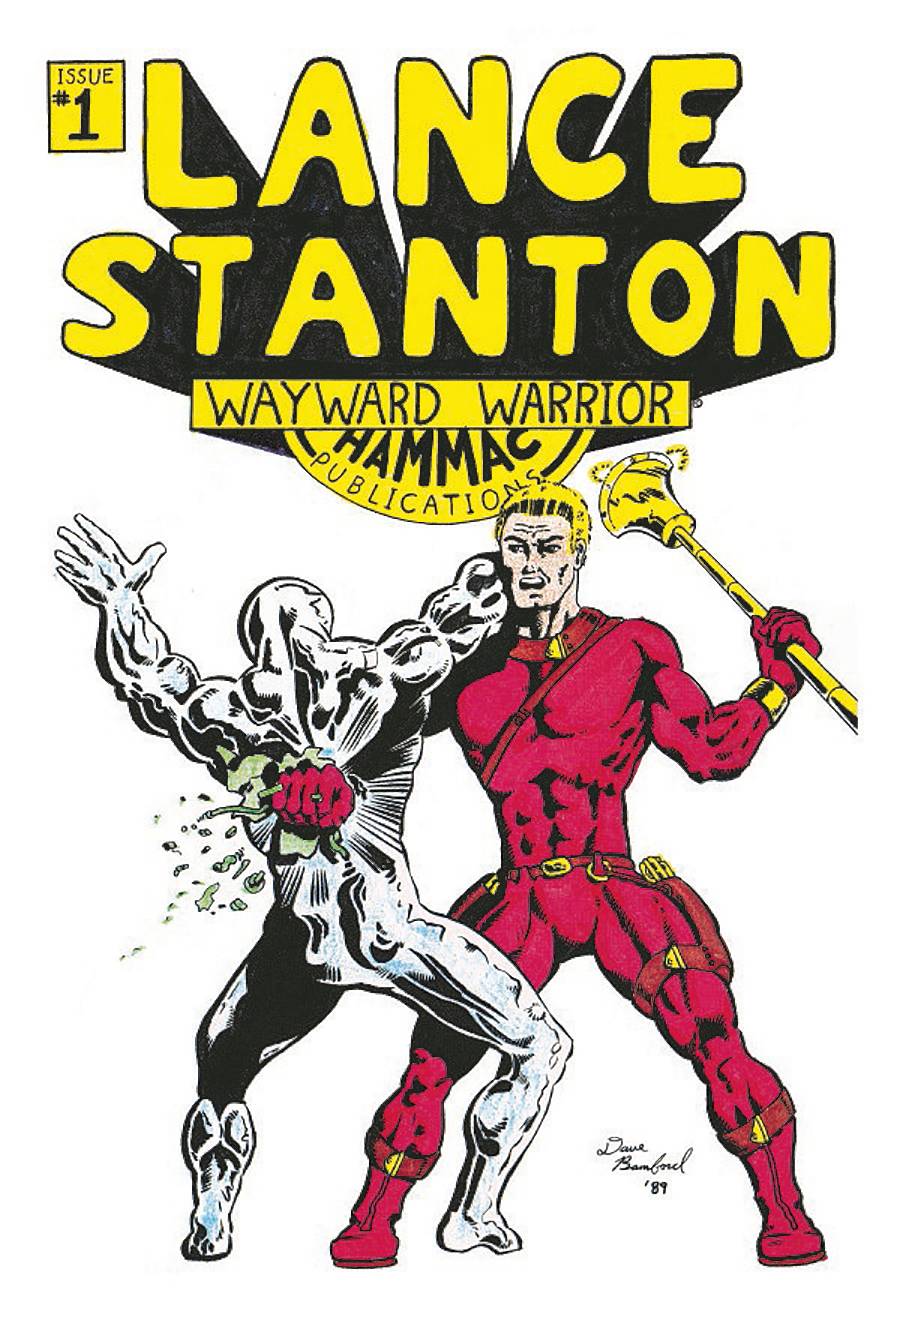 LANCE STANTON WAYWARD WARRIOR #1